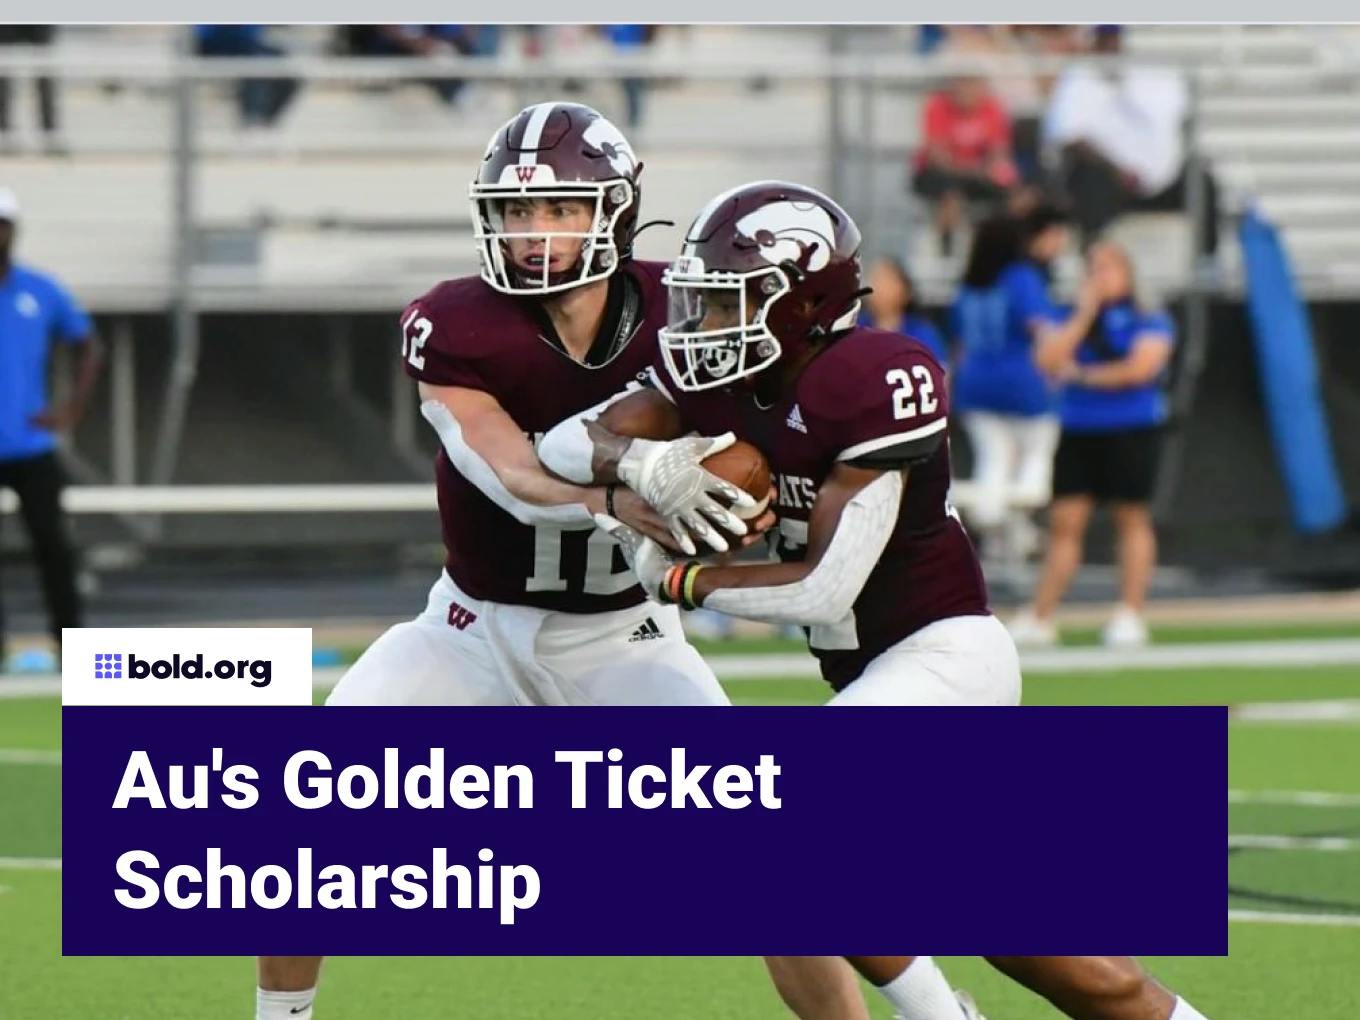 Au's Golden Ticket Scholarship